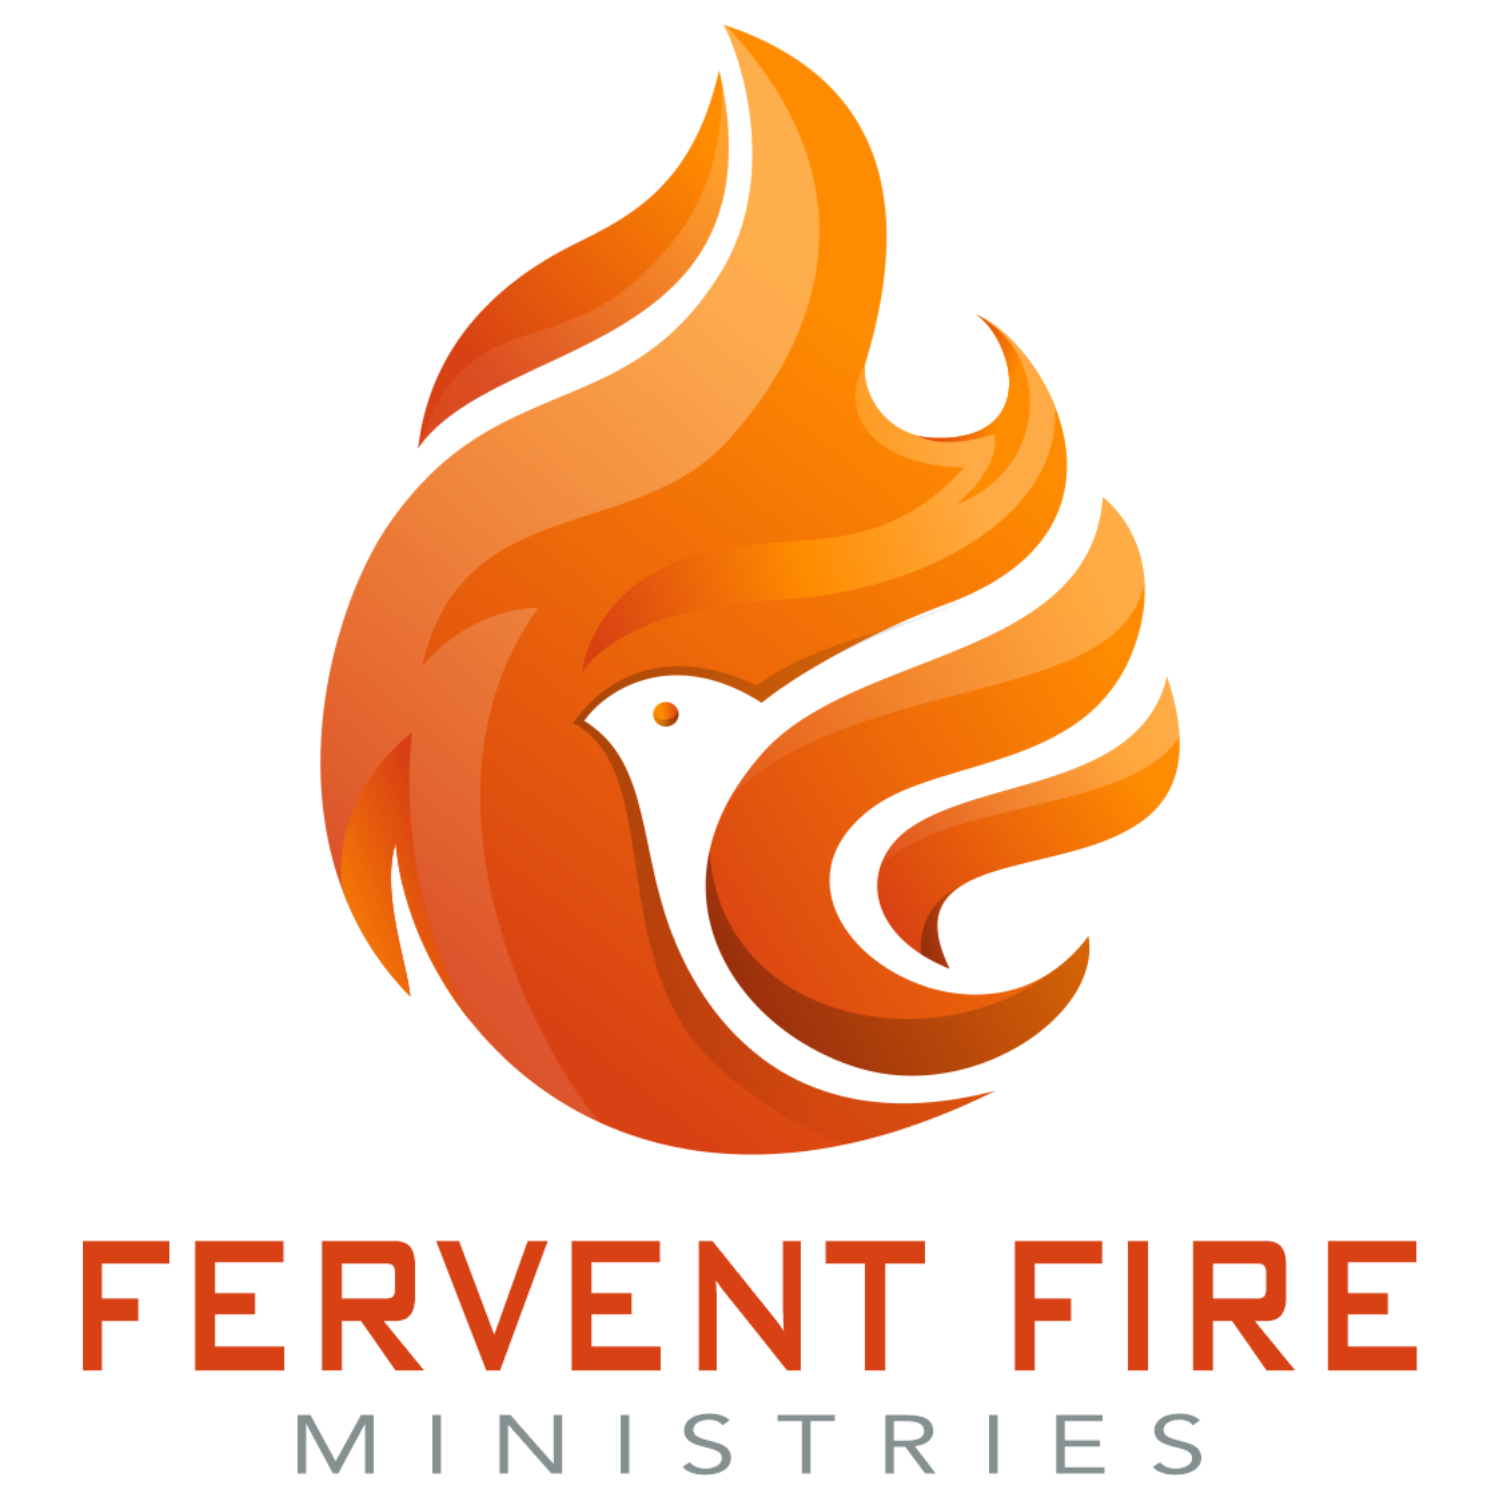 Fervent Fire Ministries logo